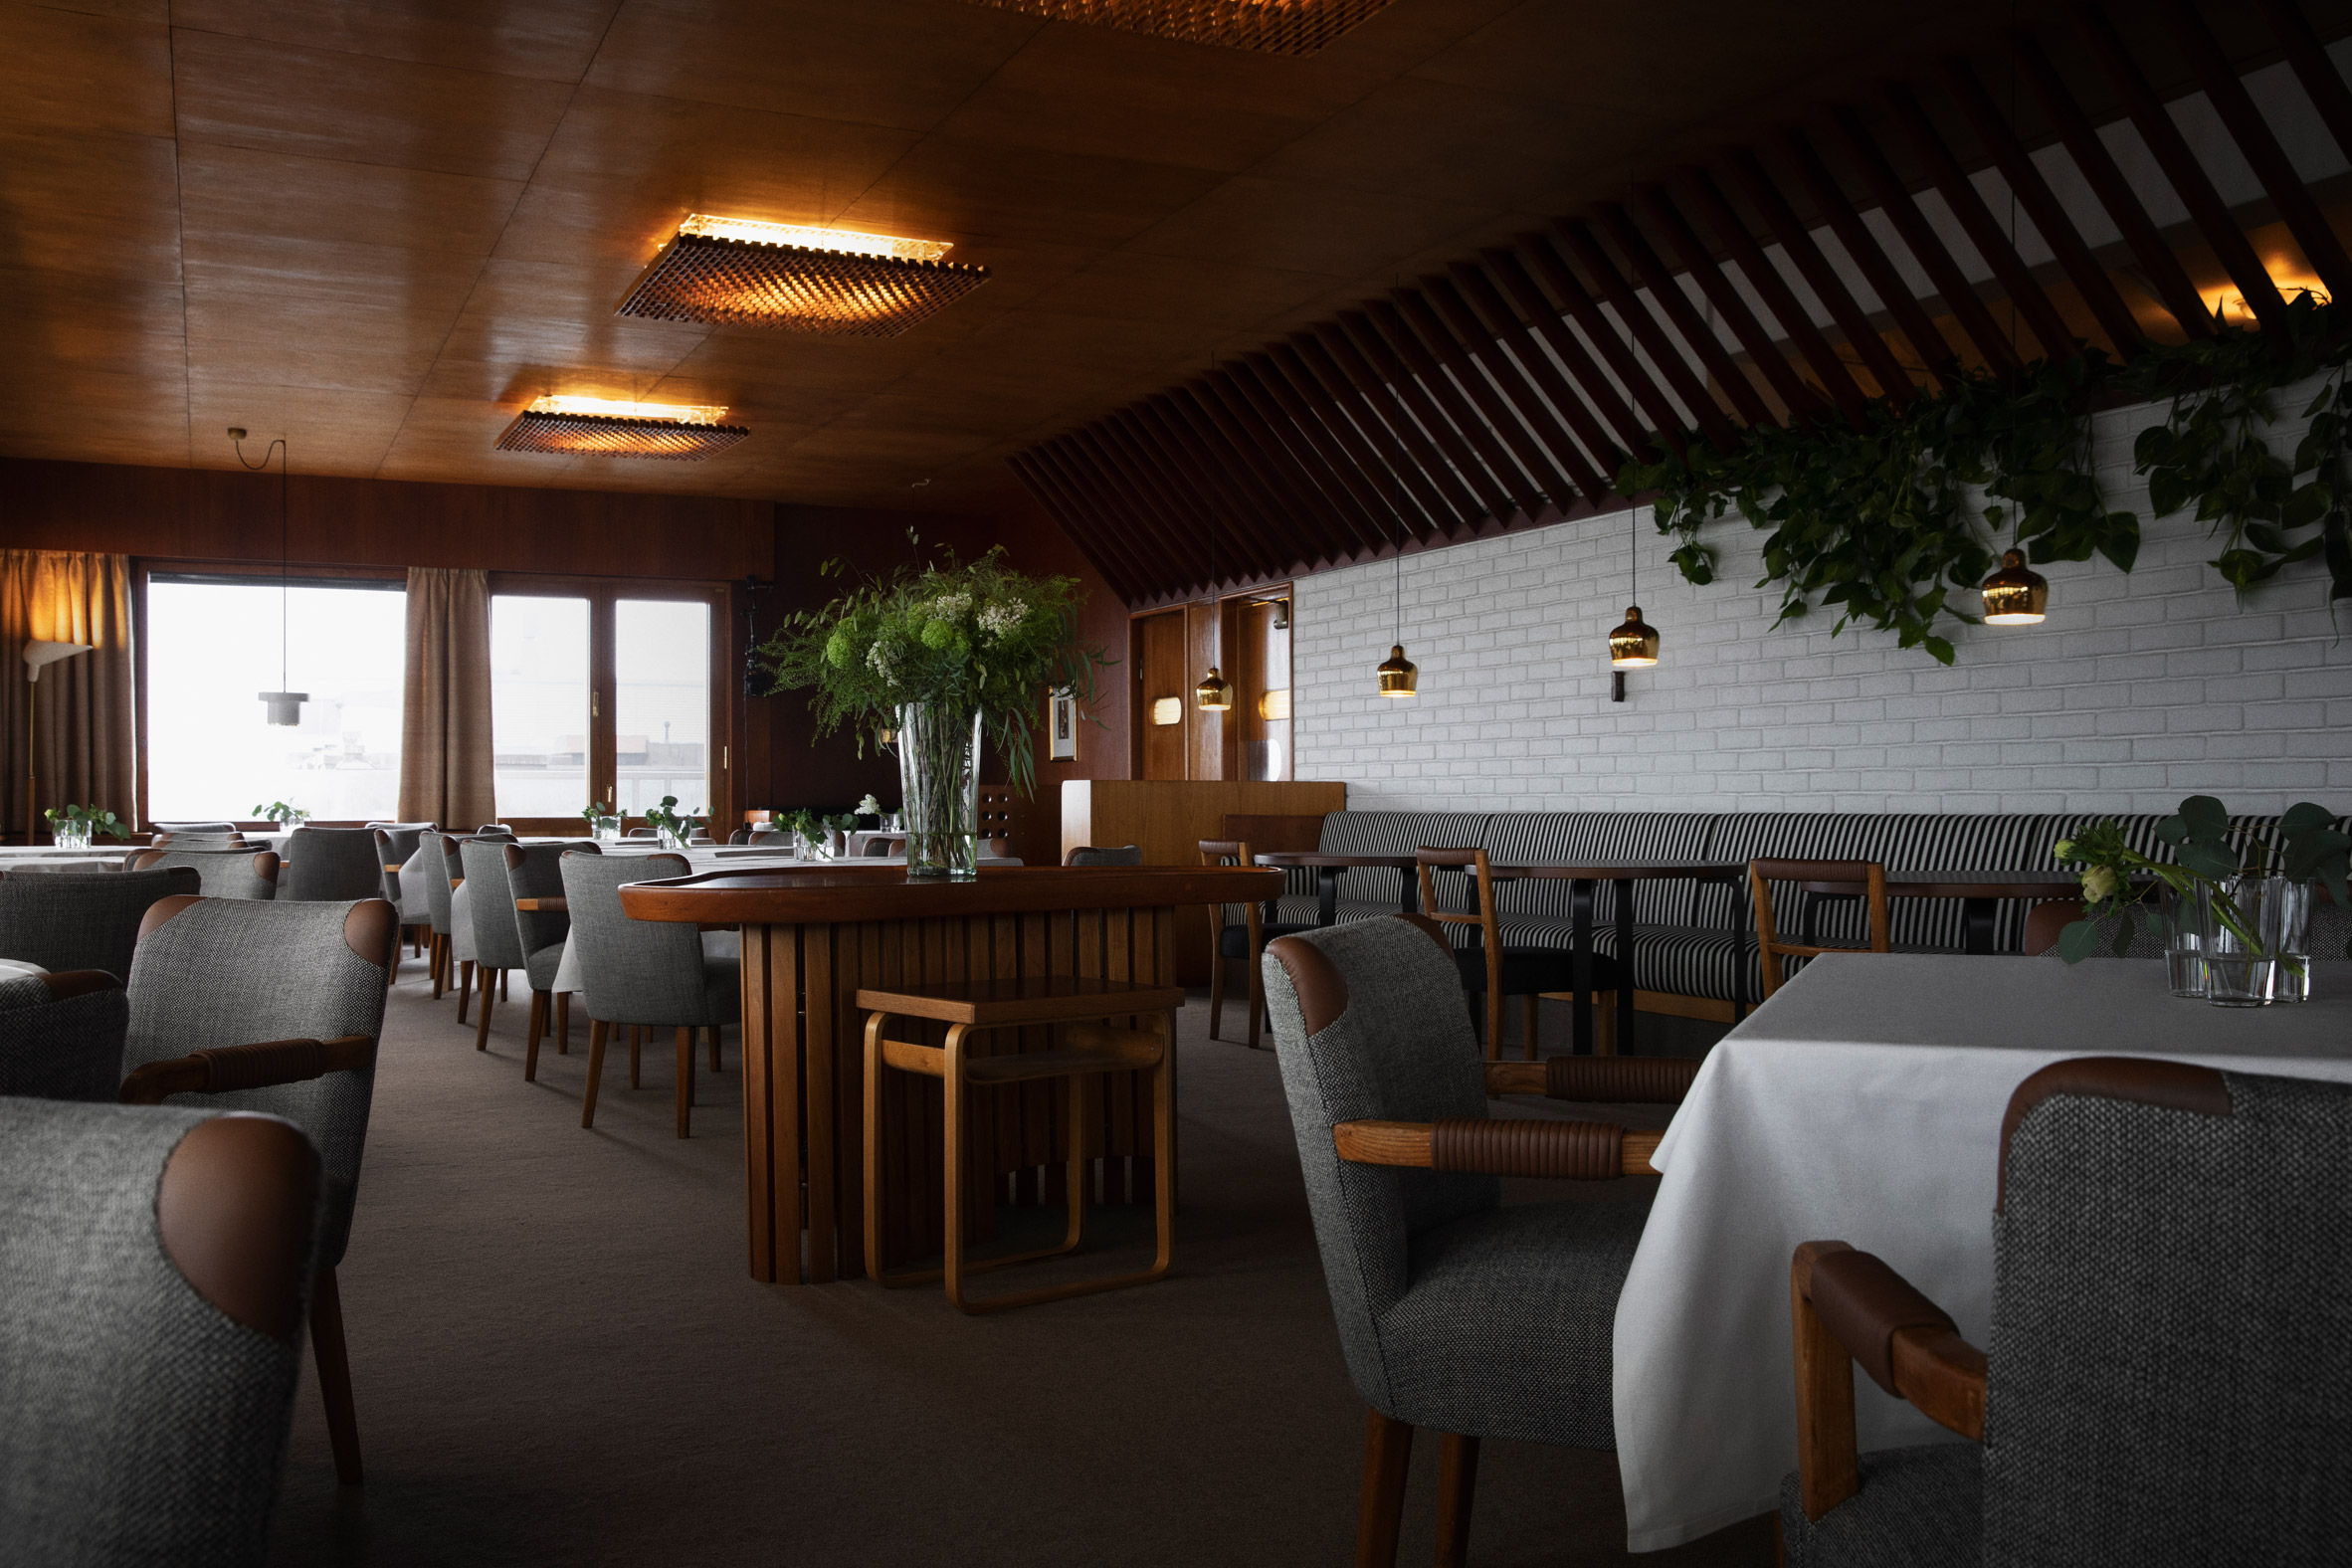 Restaurant Savoy renovation by Studio Ilse and Artek